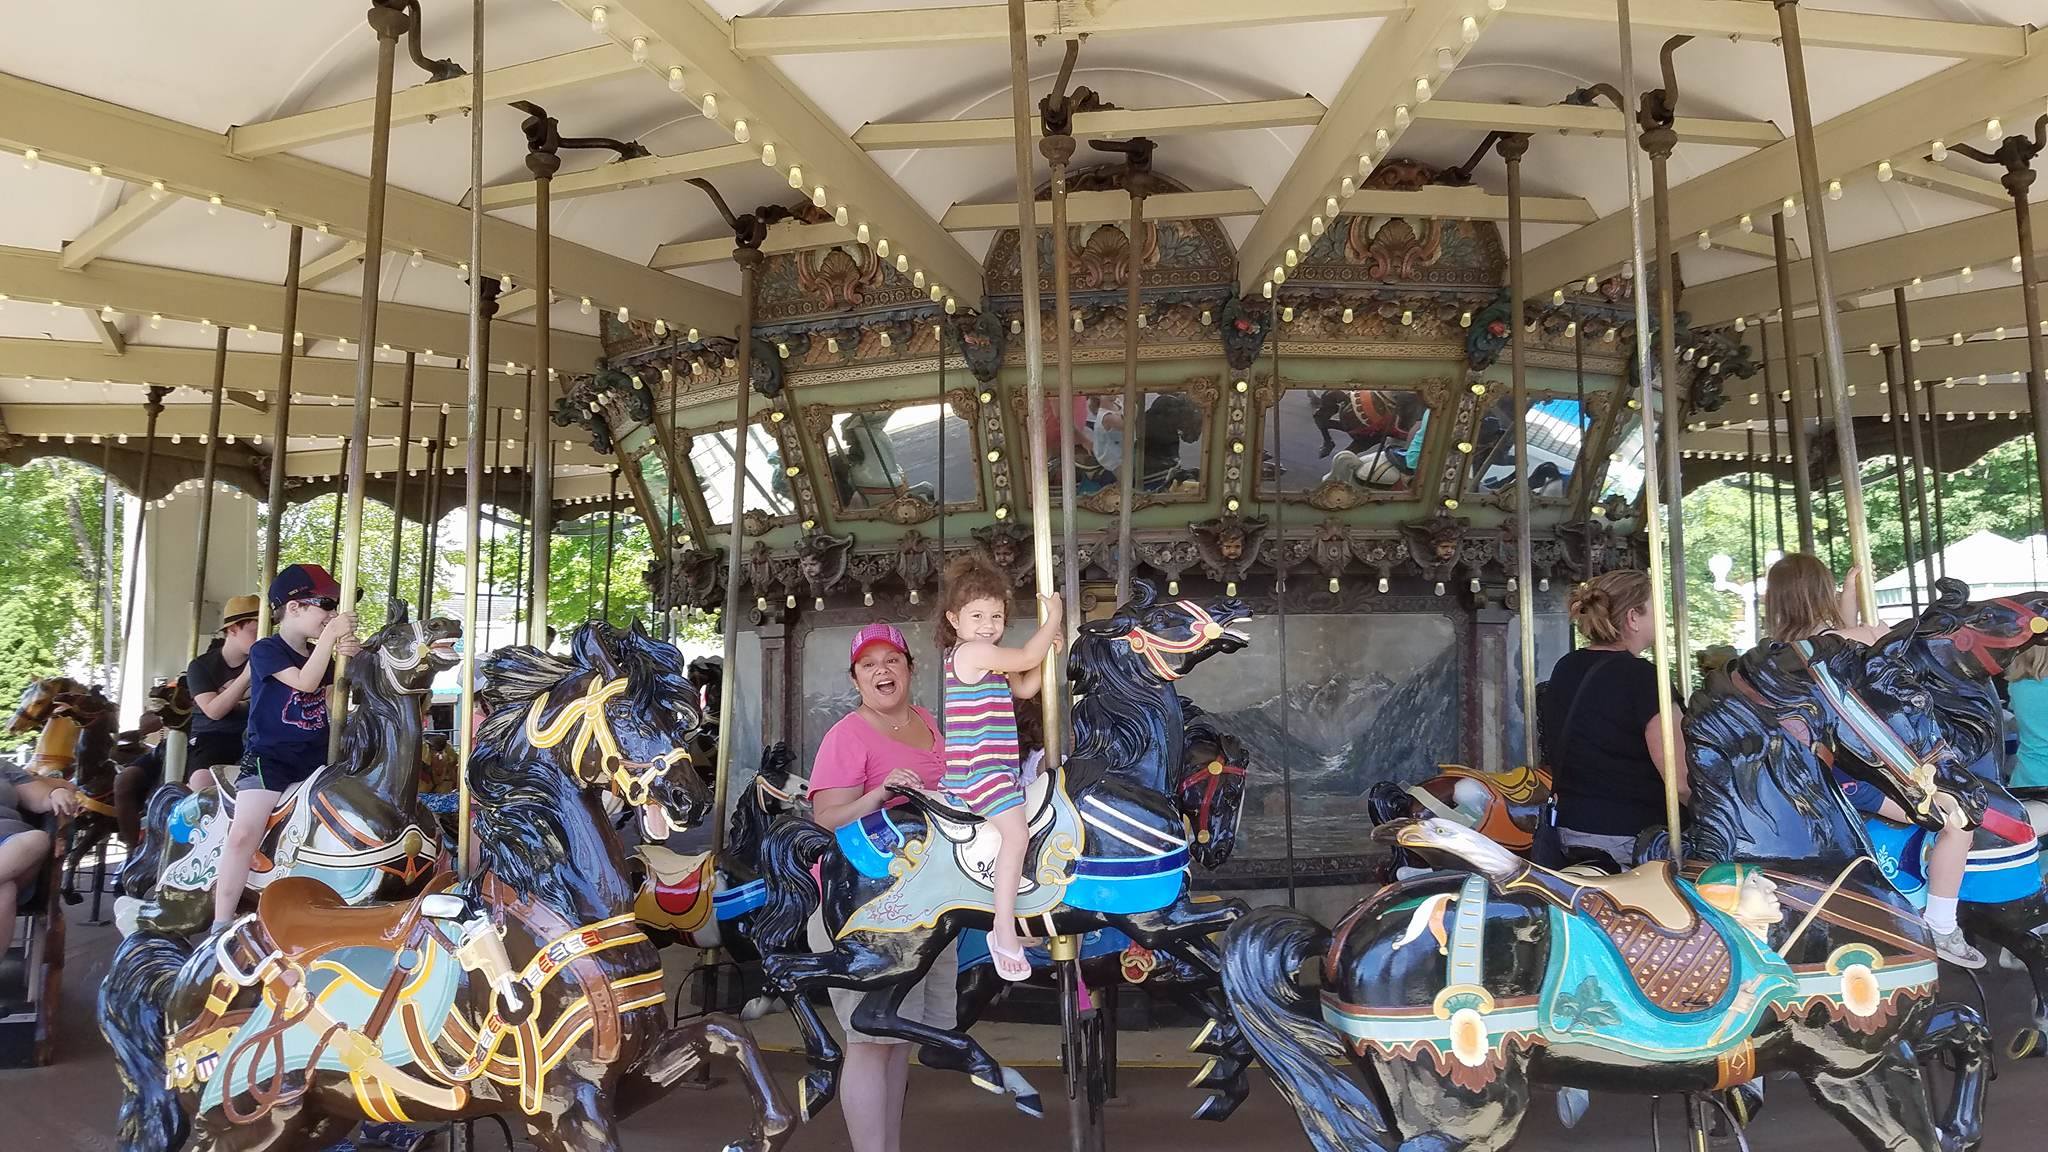 Carousel Fun at Dorney Park